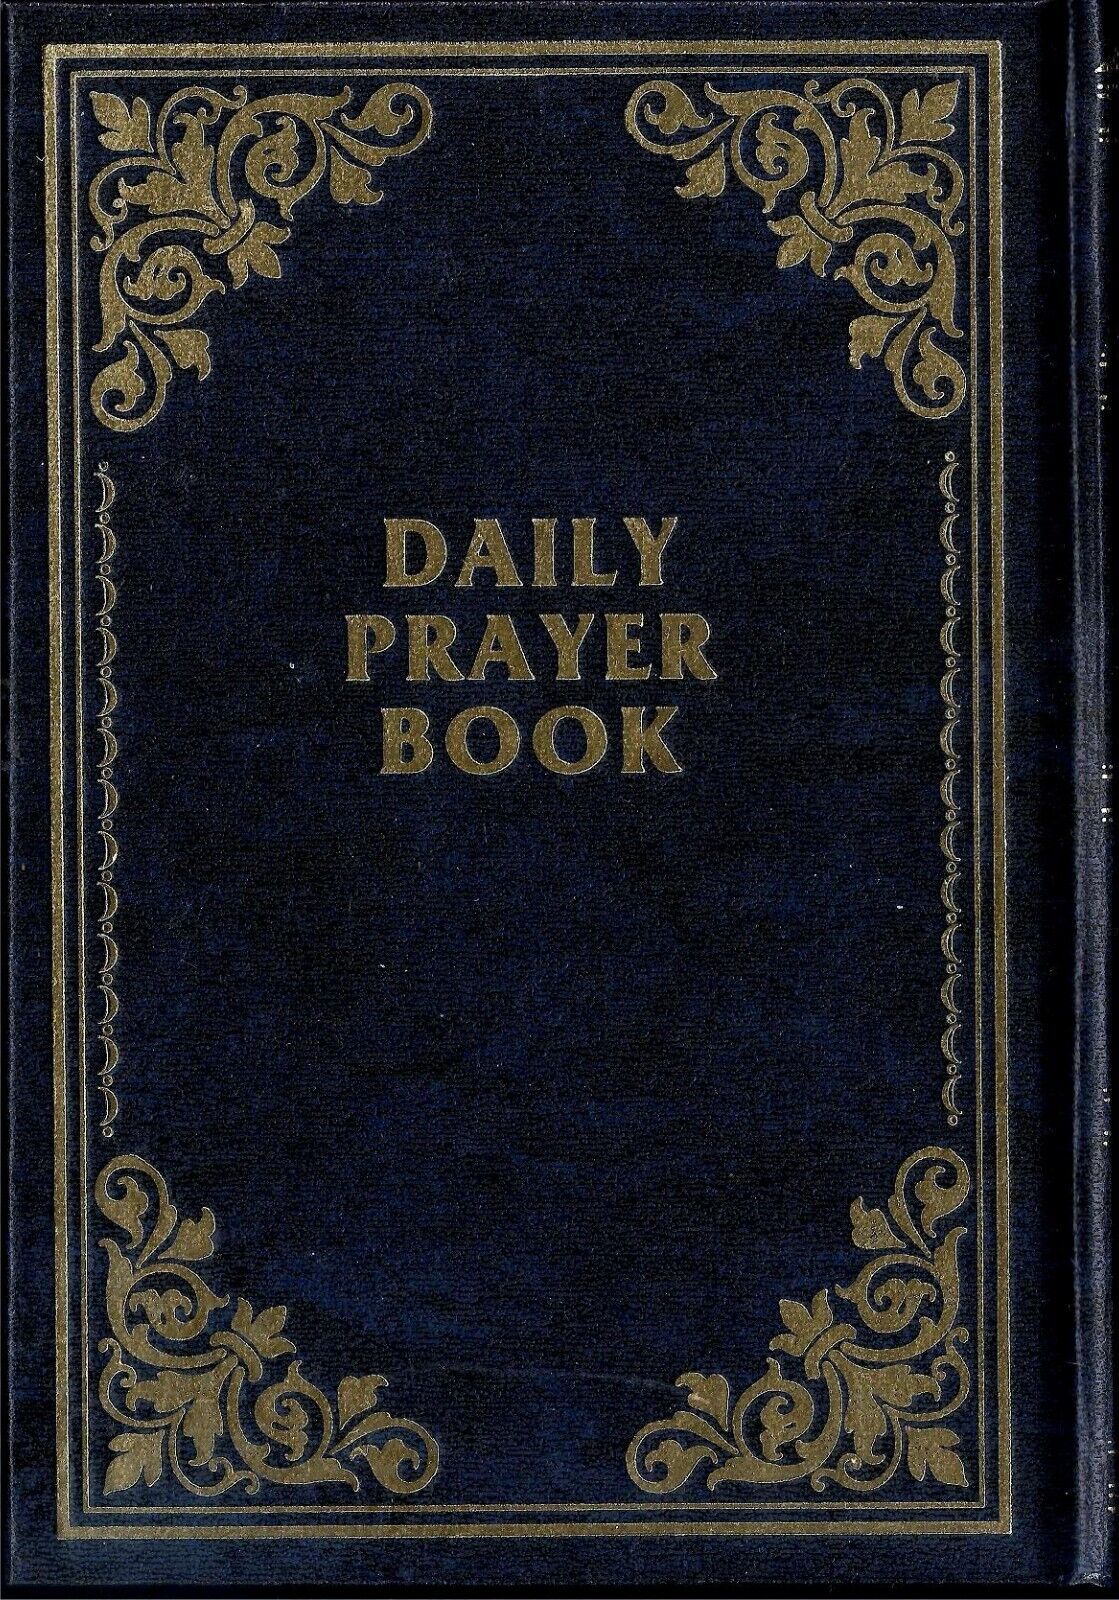 SIDUR - SIDDUR DAILY PRAYER BOOK - Hebrew and English -